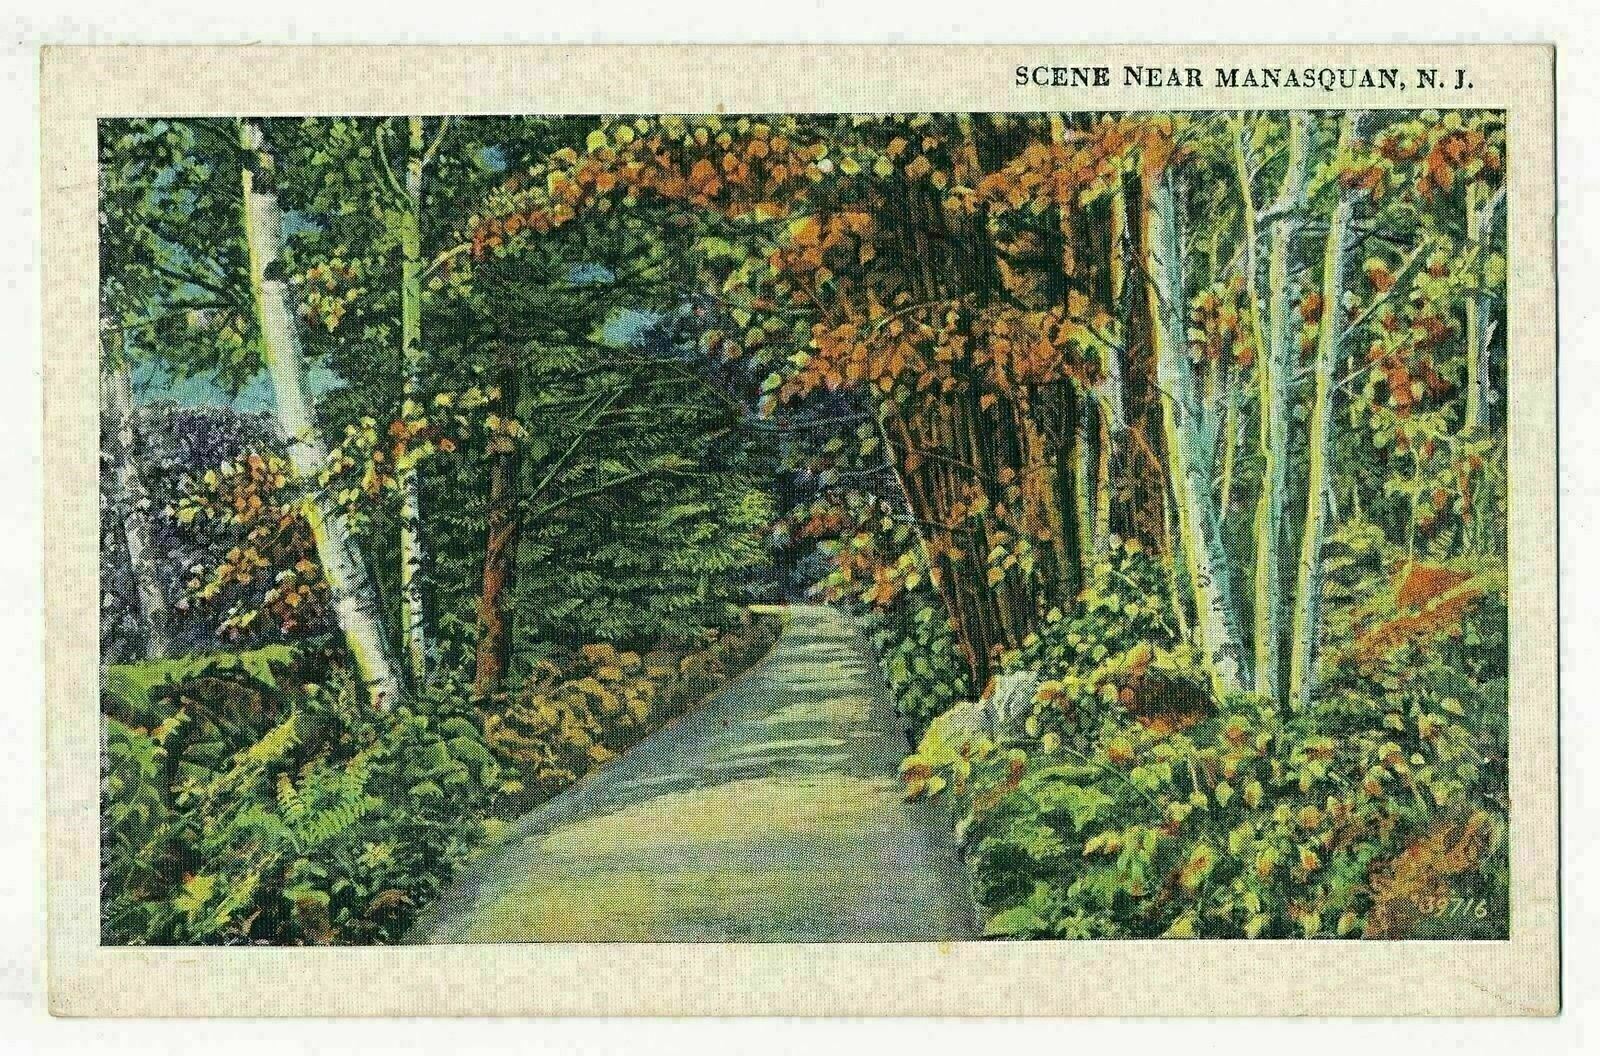 Rural Road Scene near Manasquan, New Jersey 1938